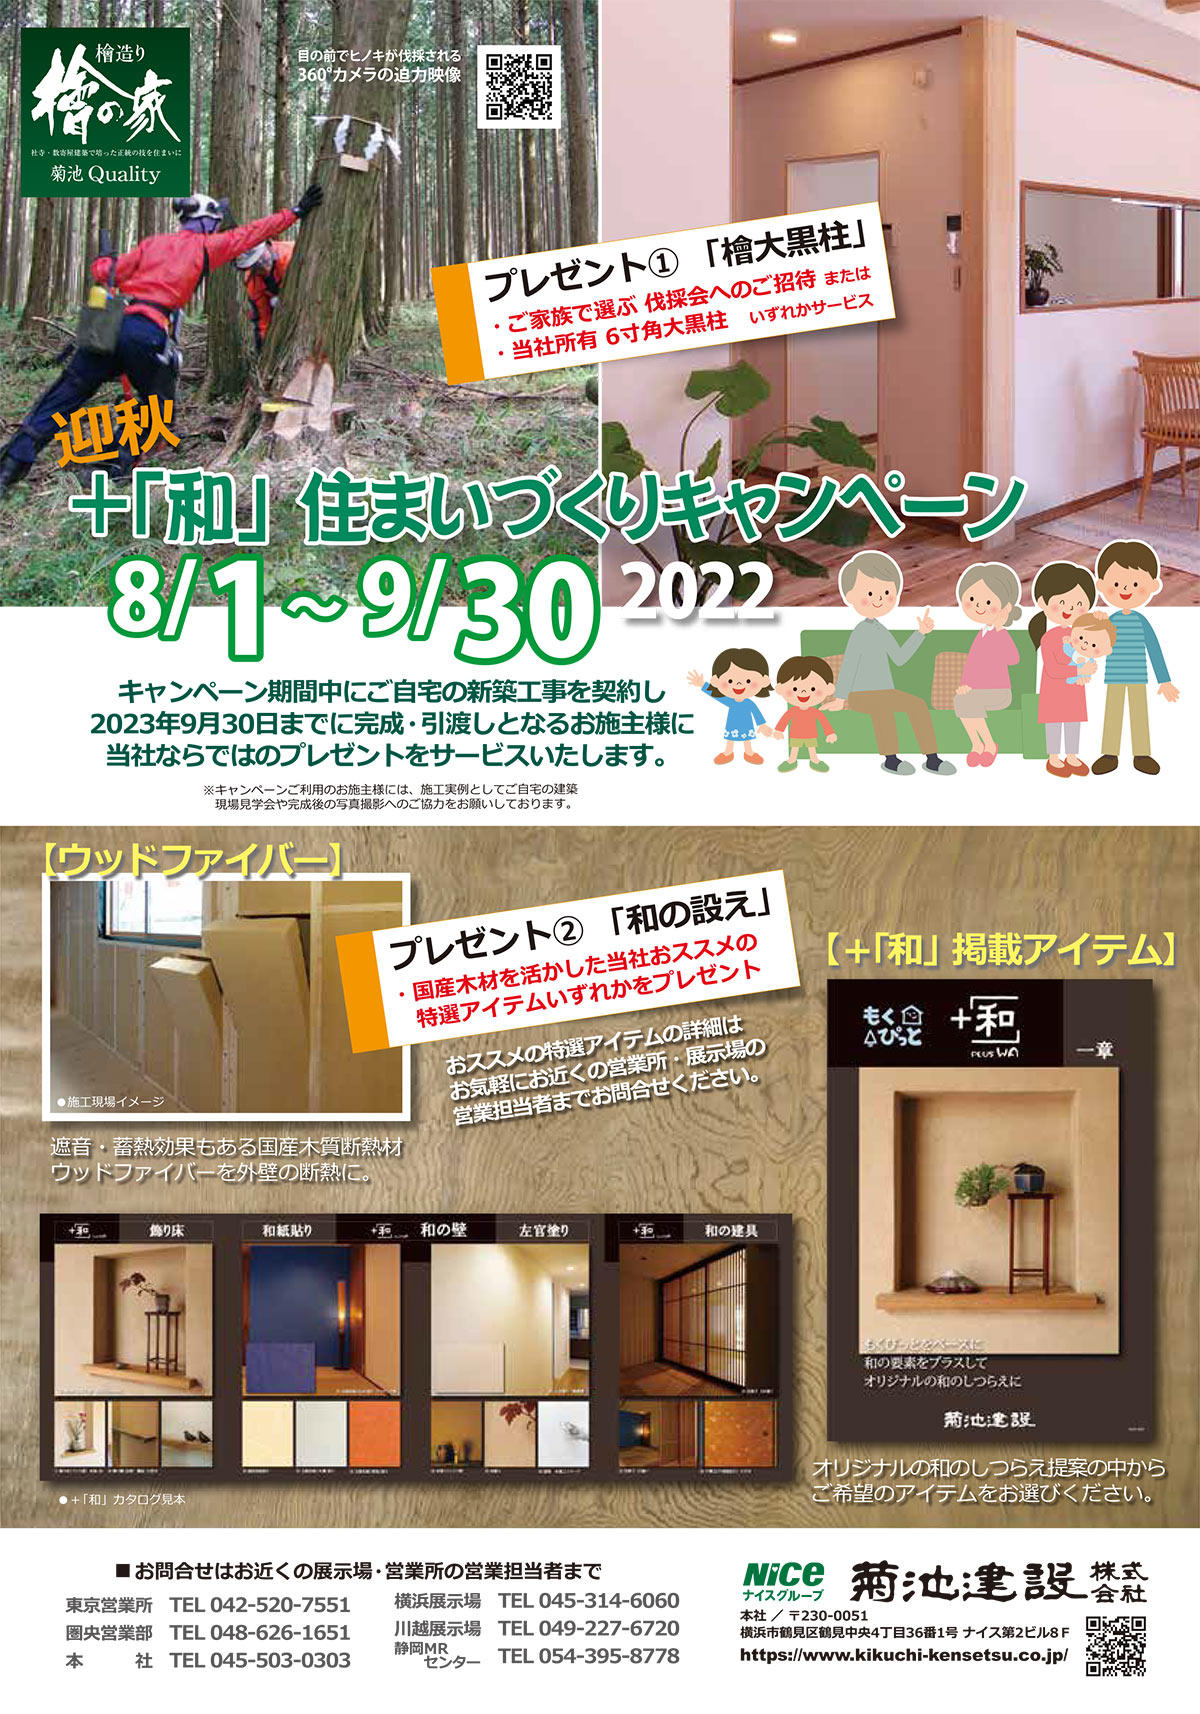 https://www.kikuchi-kensetsu.co.jp/news/images/2022_summer_chpn.jpg